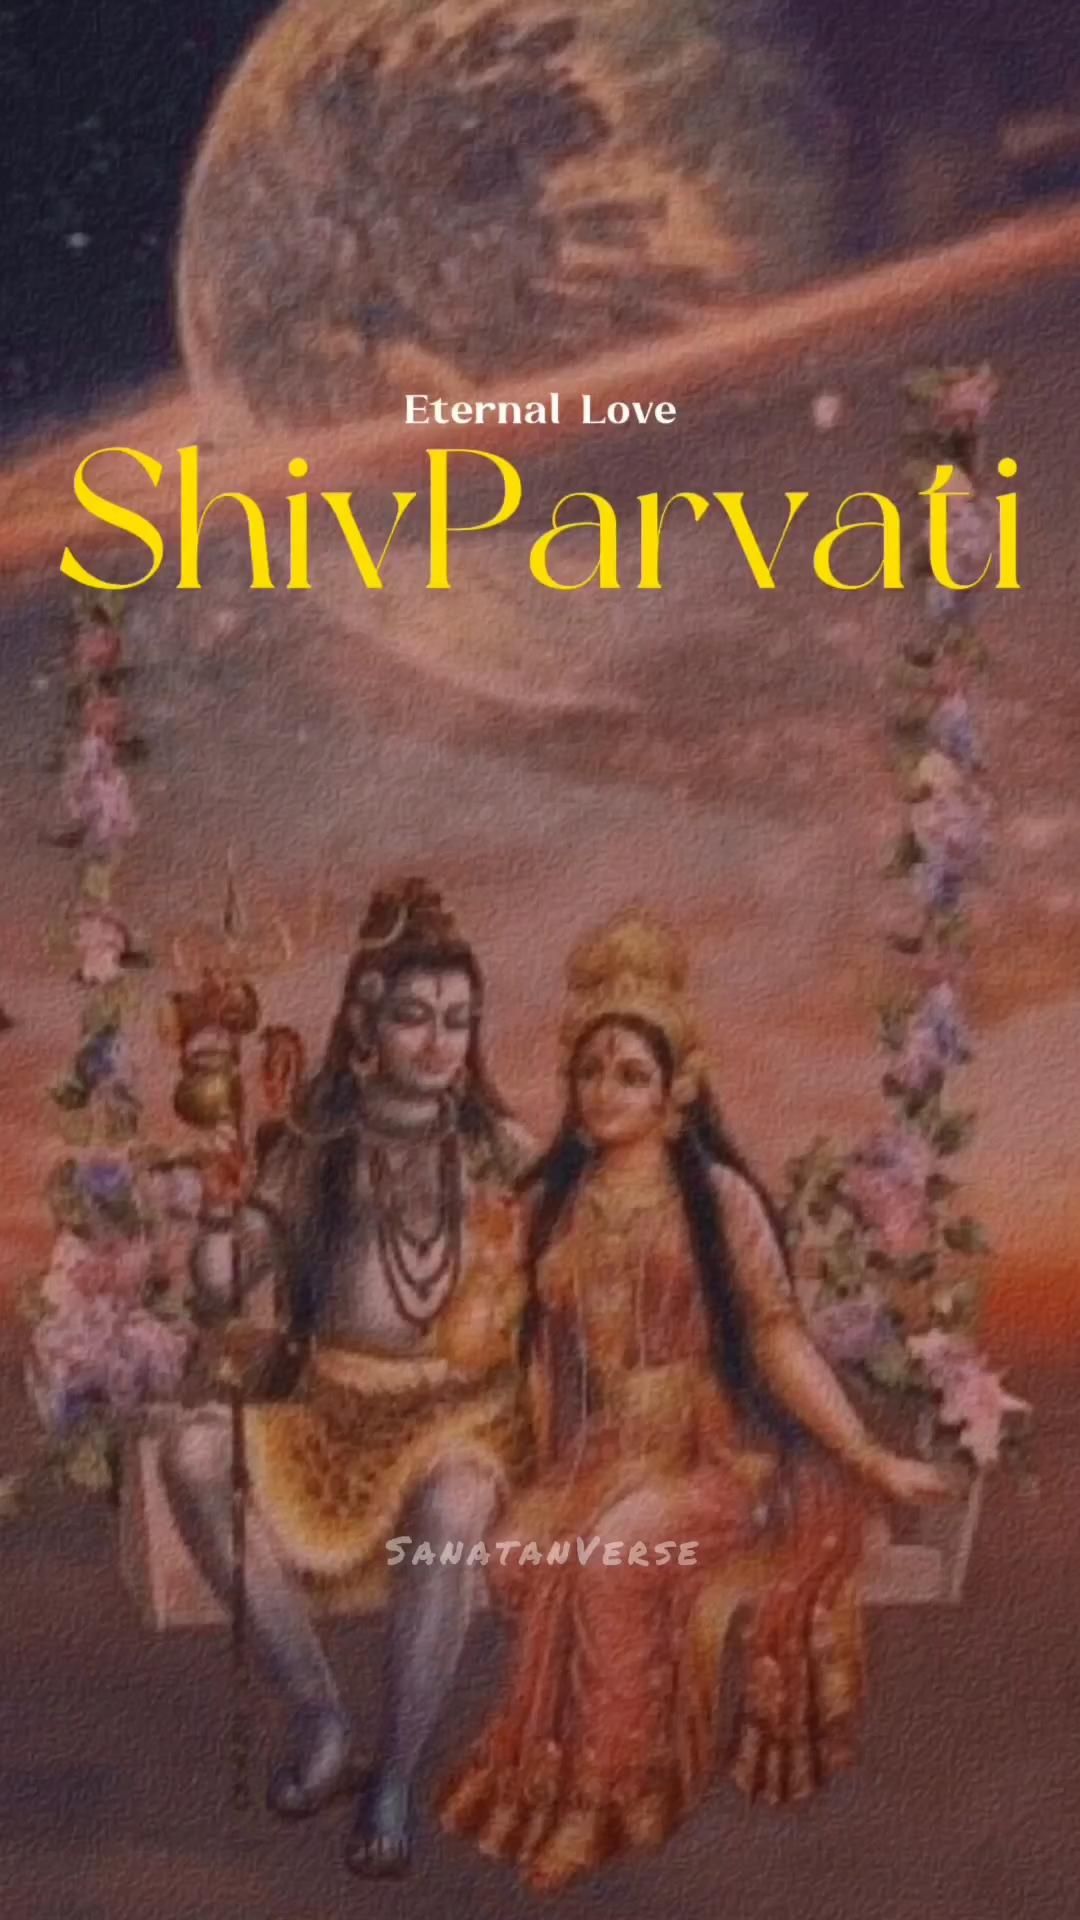 Shiv Parvati 💖 Follow and Like ✨️